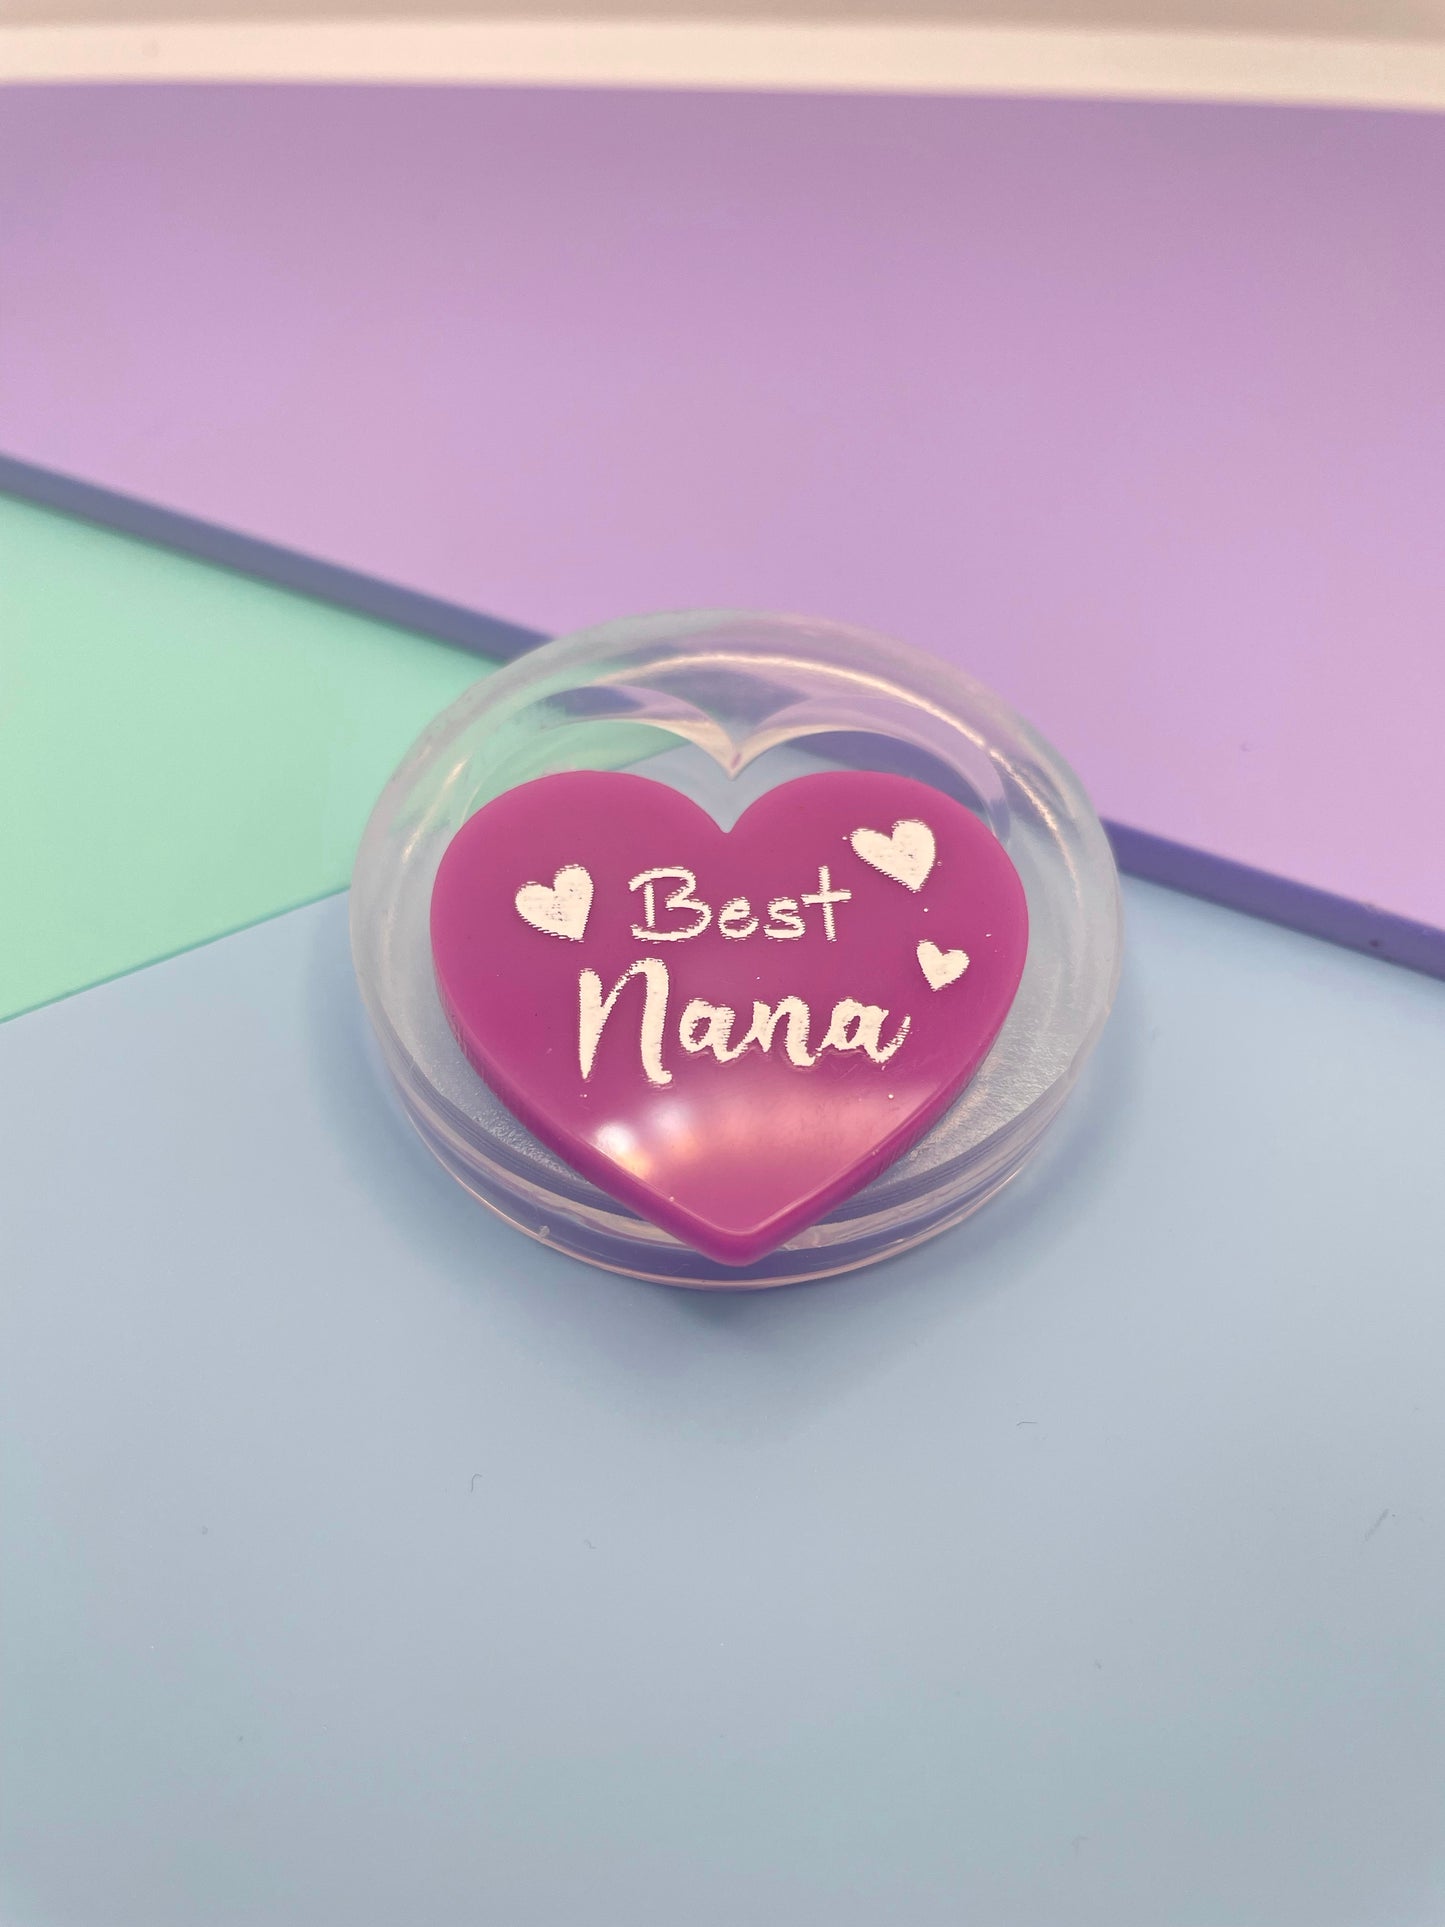 Best Nana badge mold pin brooch keychain